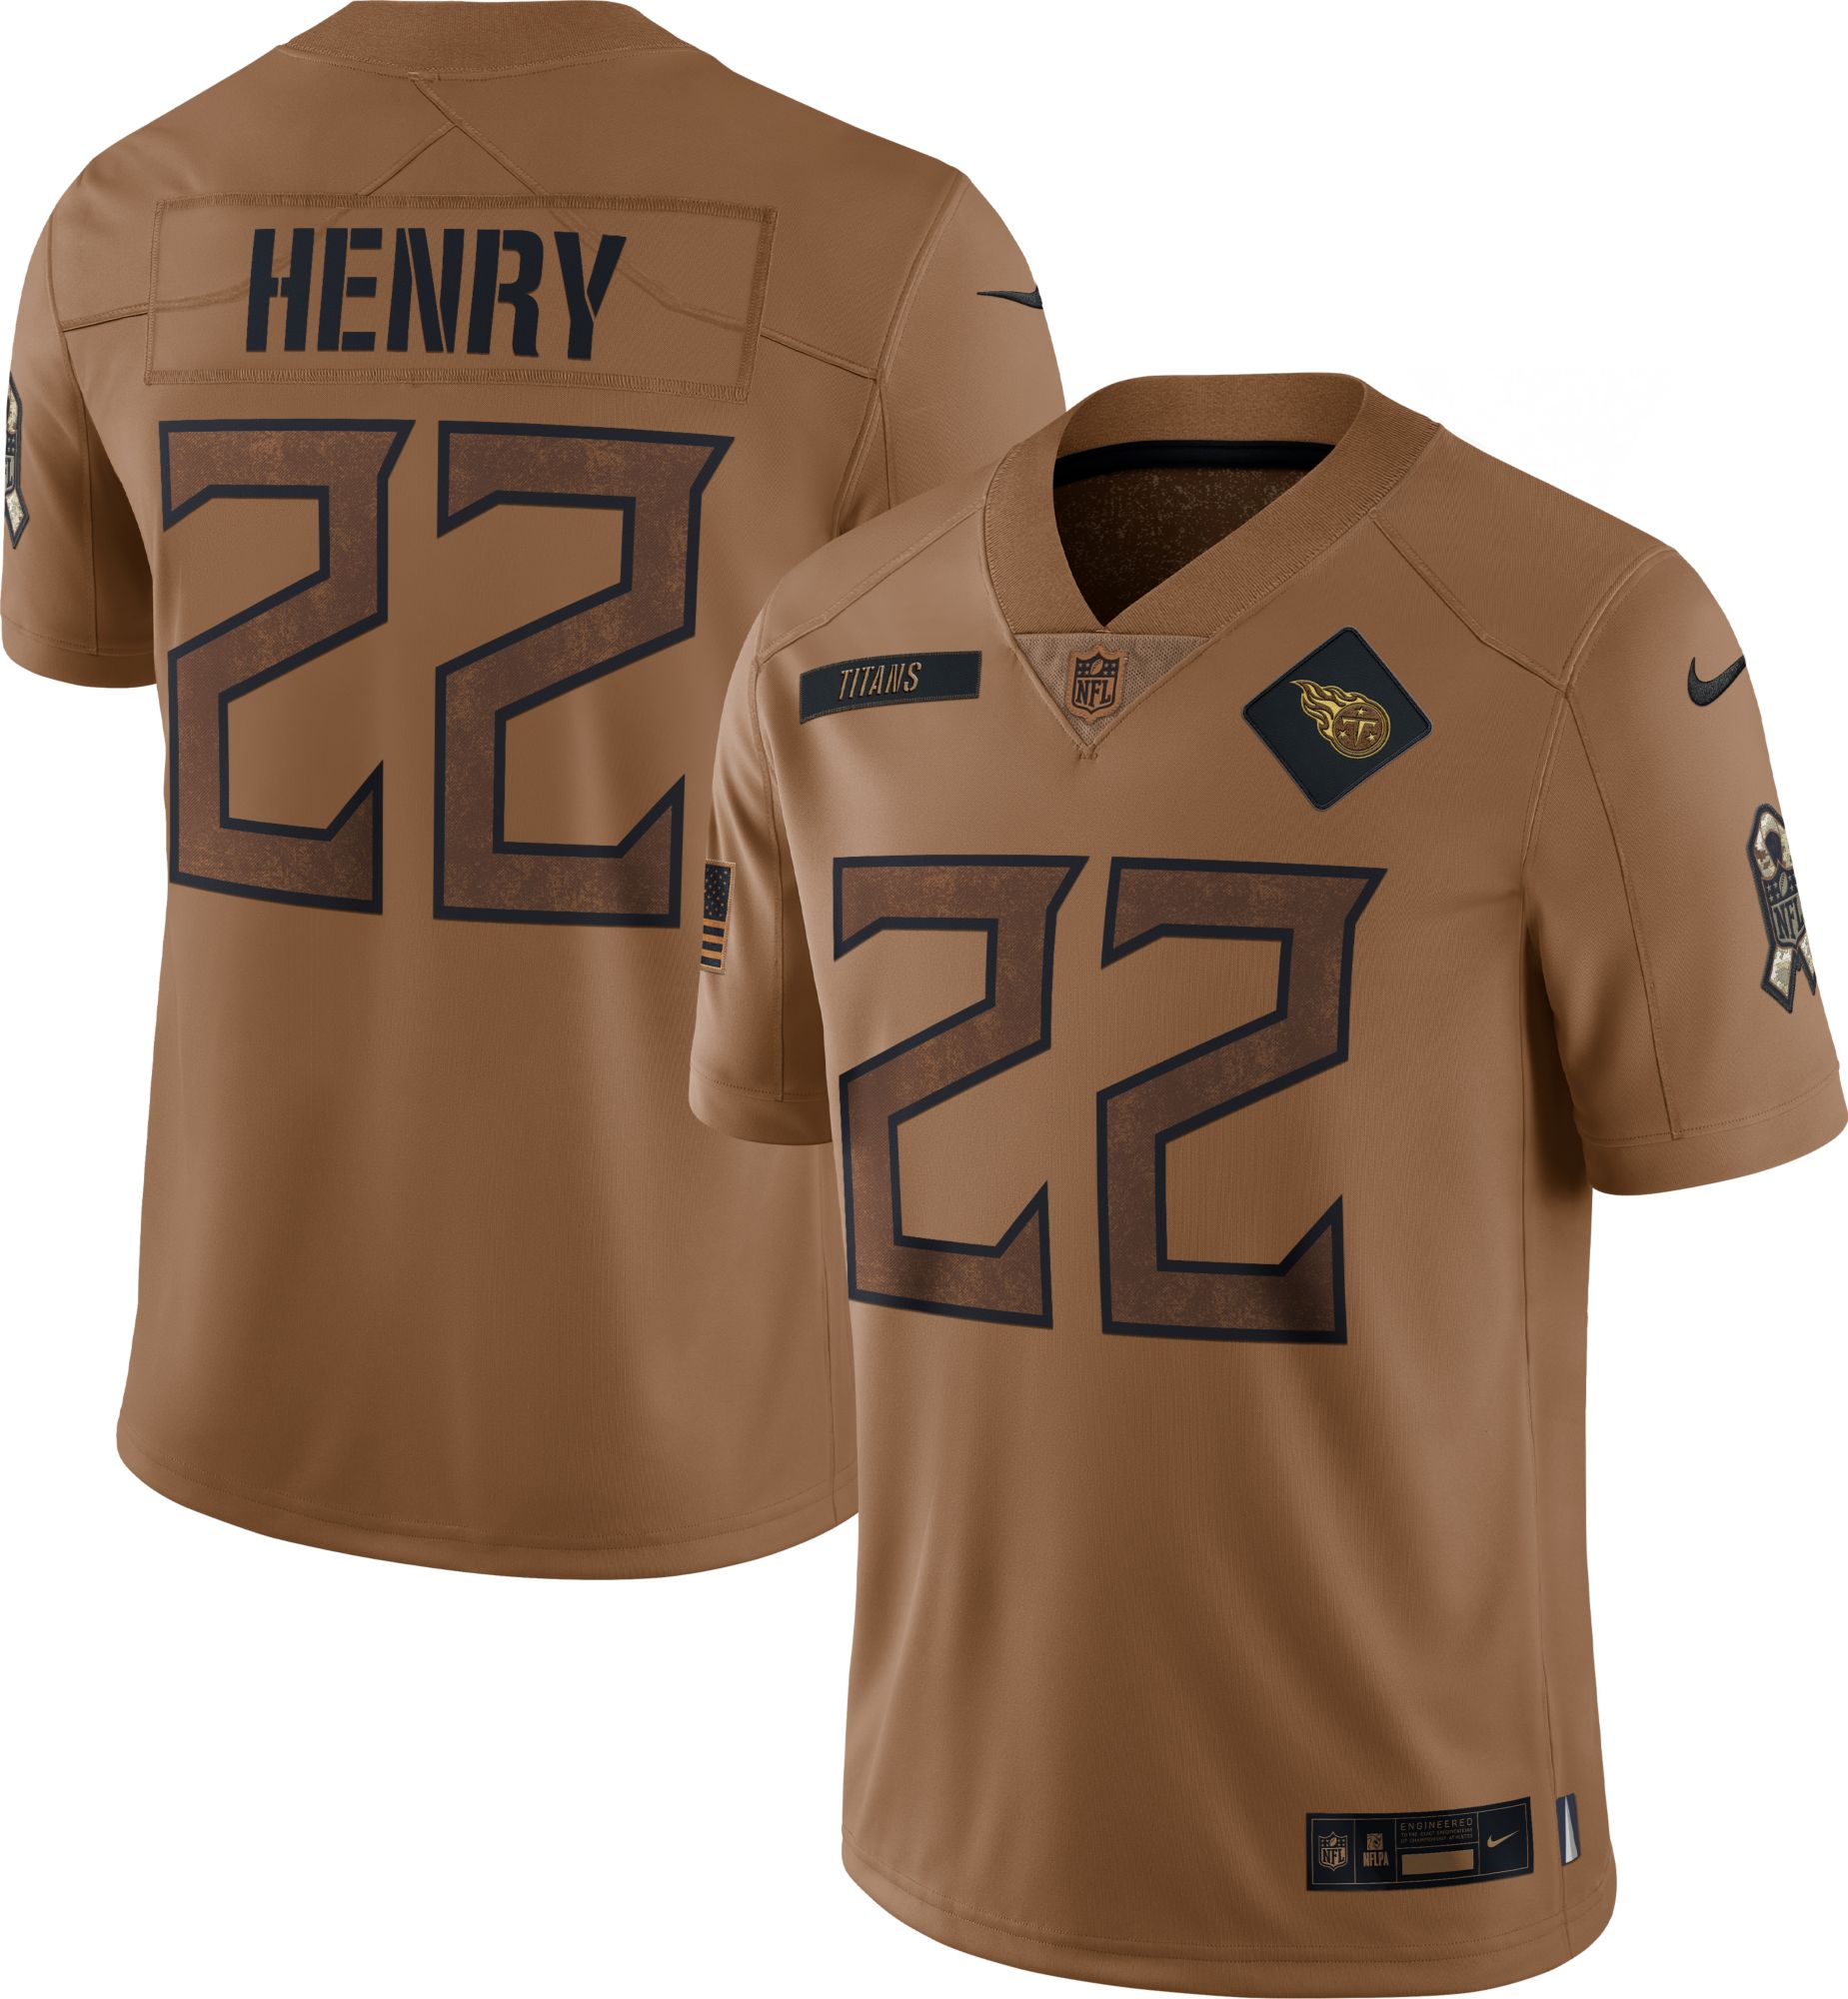 Derrick Henry Alabama jersey